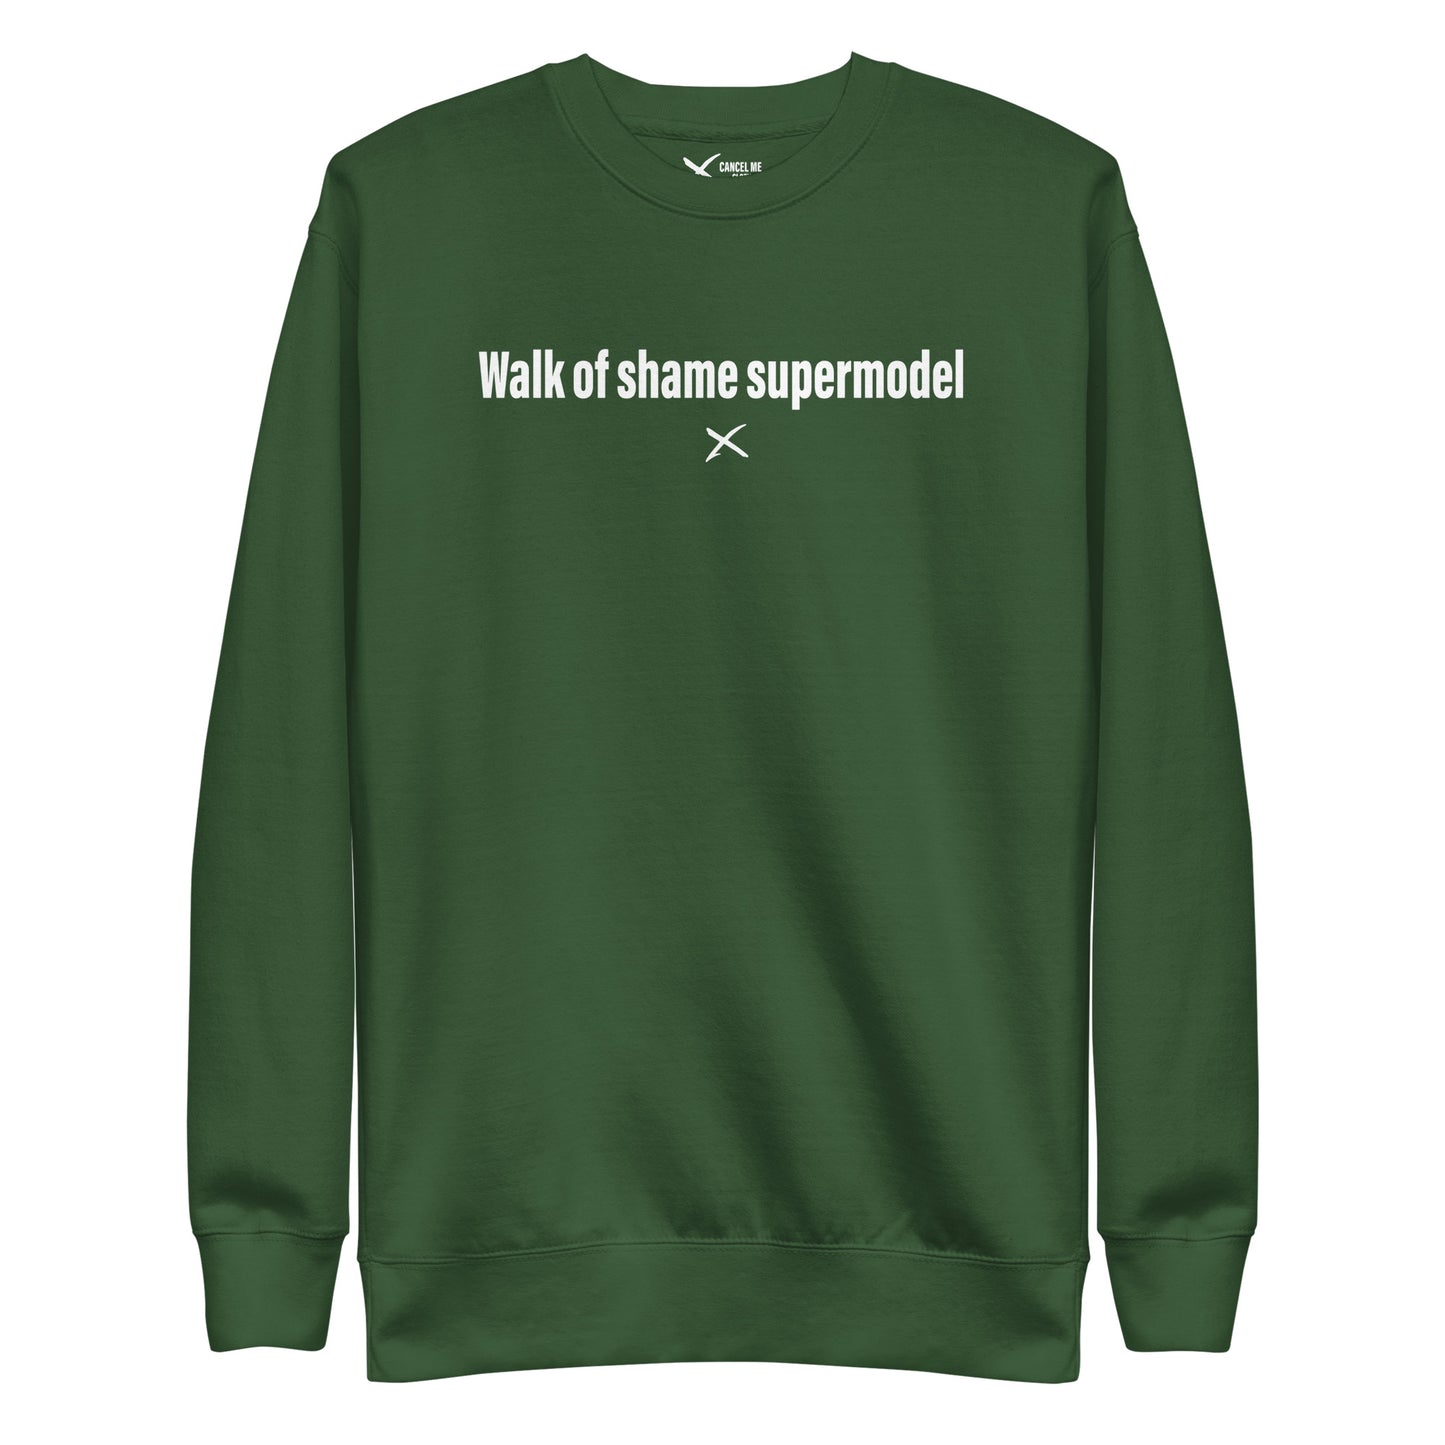 Walk of shame supermodel - Sweatshirt